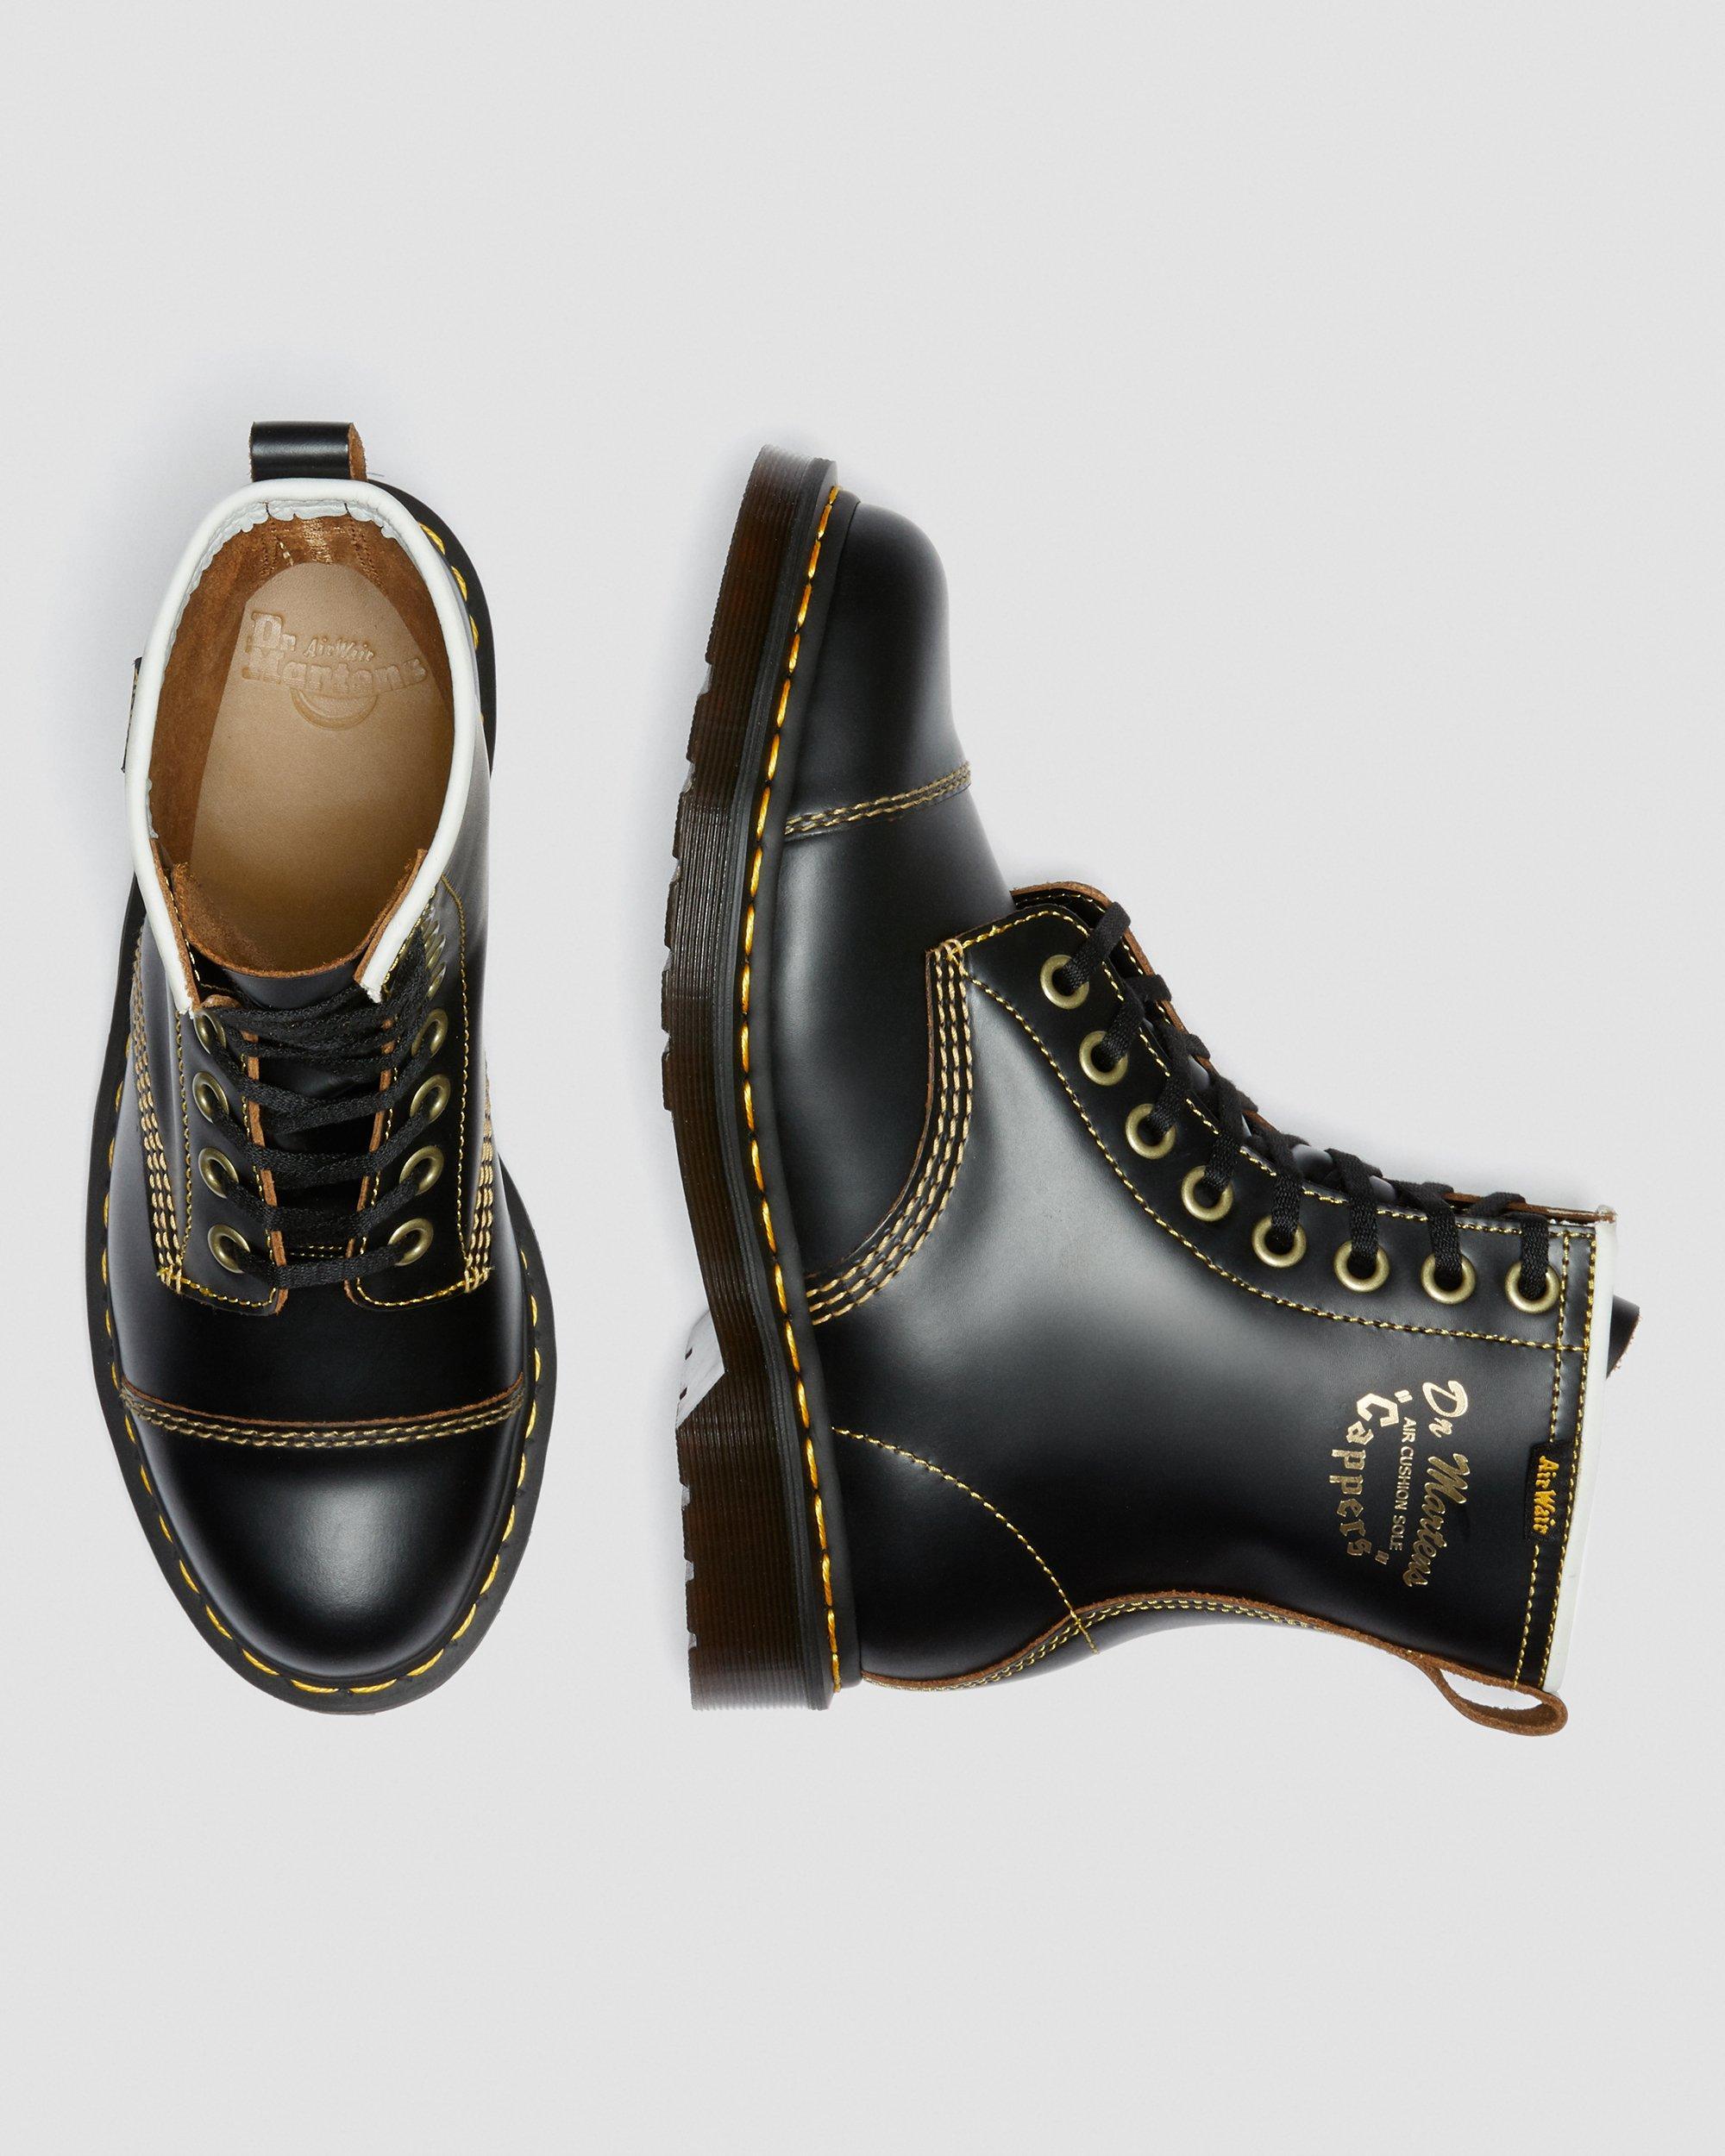 Dr. Martens Capper Vintage Smooth Leather Boots in Black | Lyst